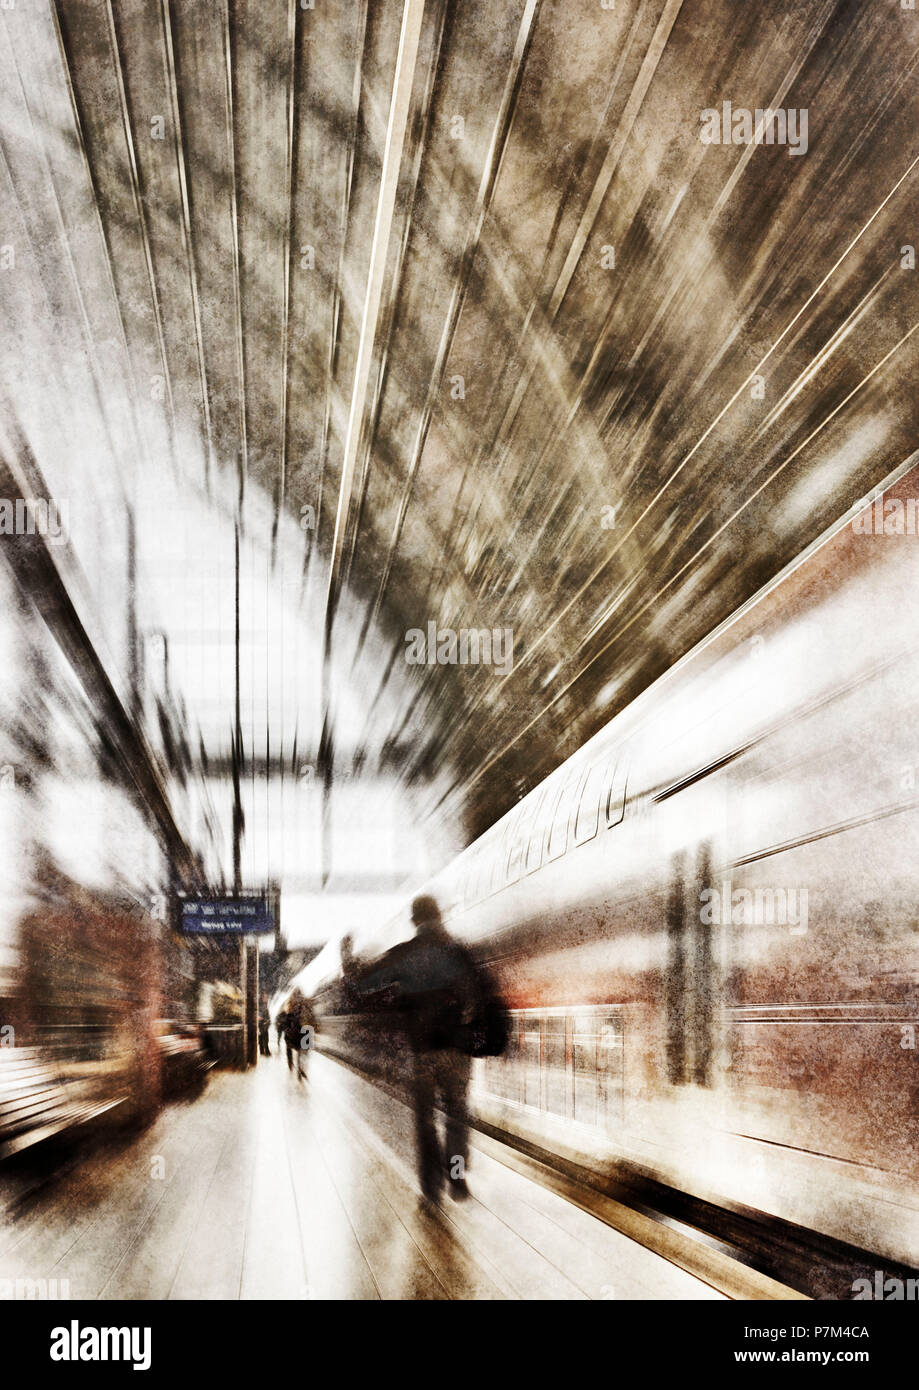 Platform, travelers walking along a train, backlight, alienated, [M], RailArt Stock Photo